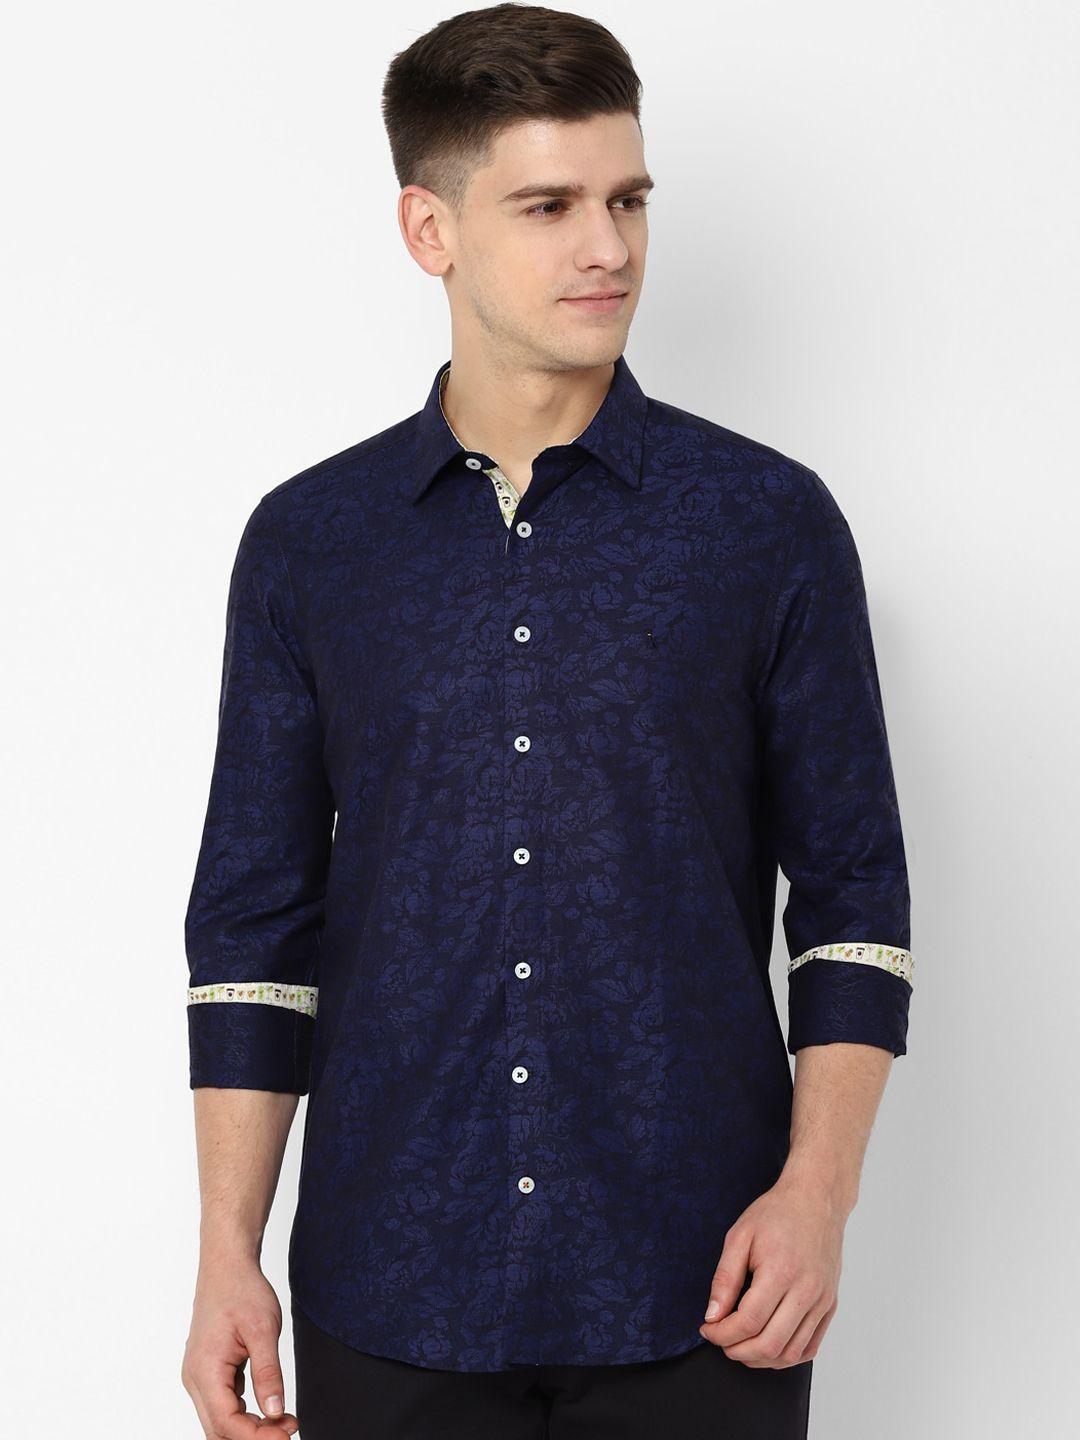 simon carter london men navy blue slim fit printed casual shirt